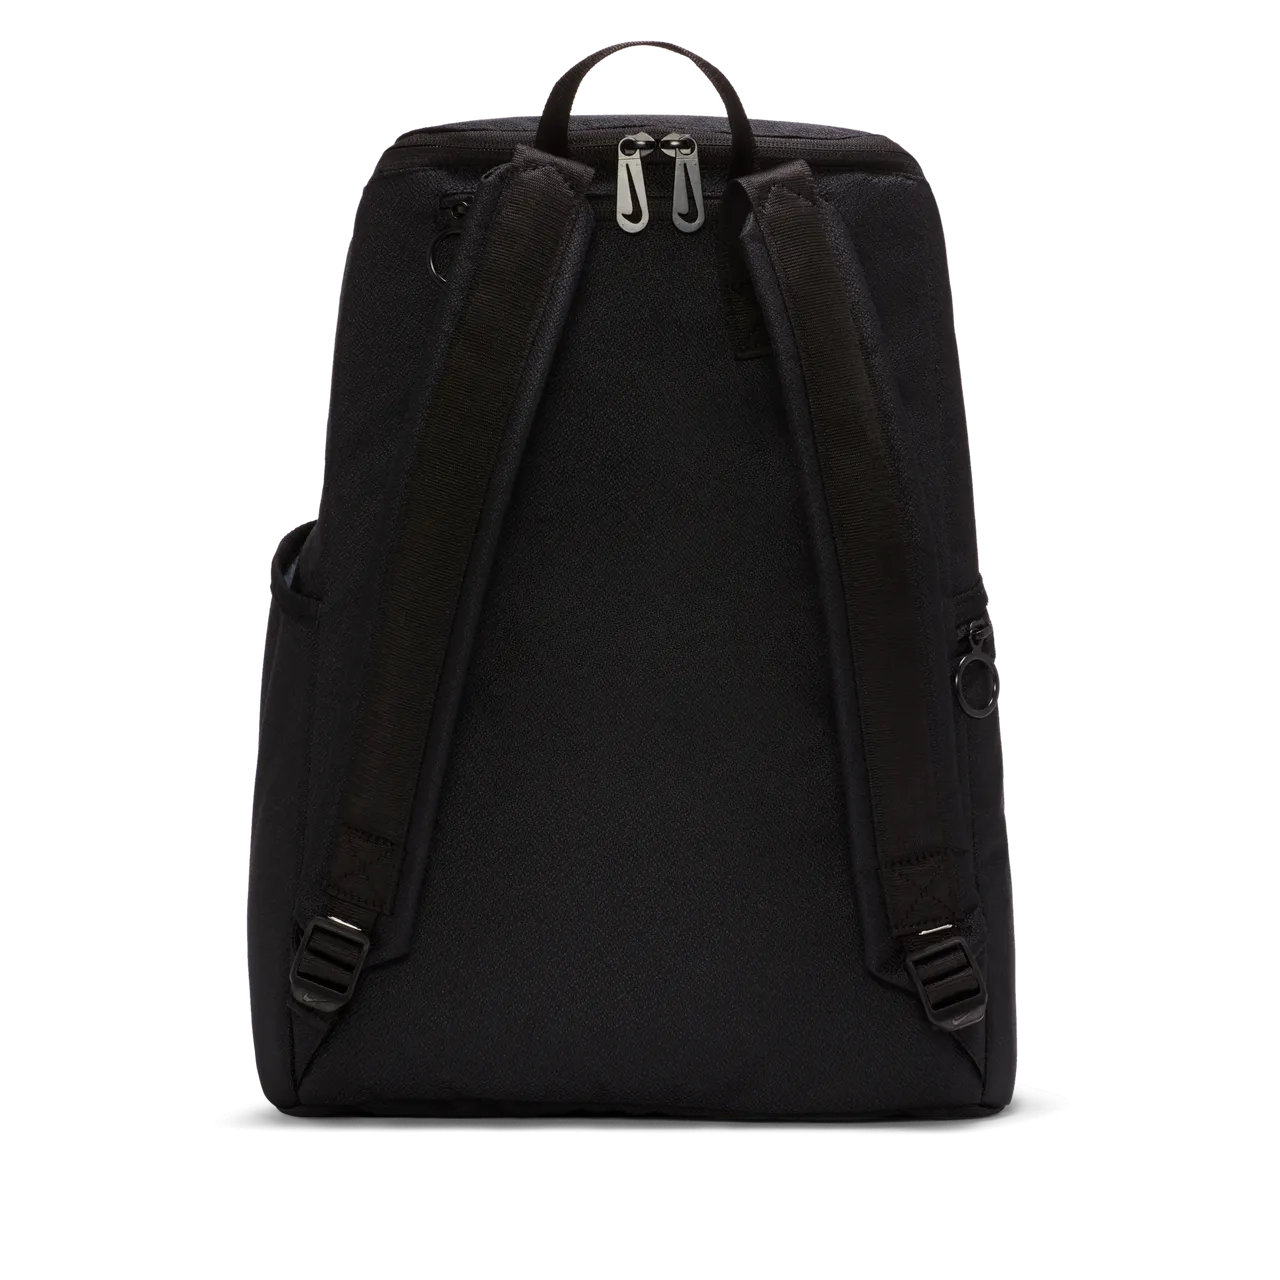 Nike One Women's Training Backpack (16L) - Black - Polyester